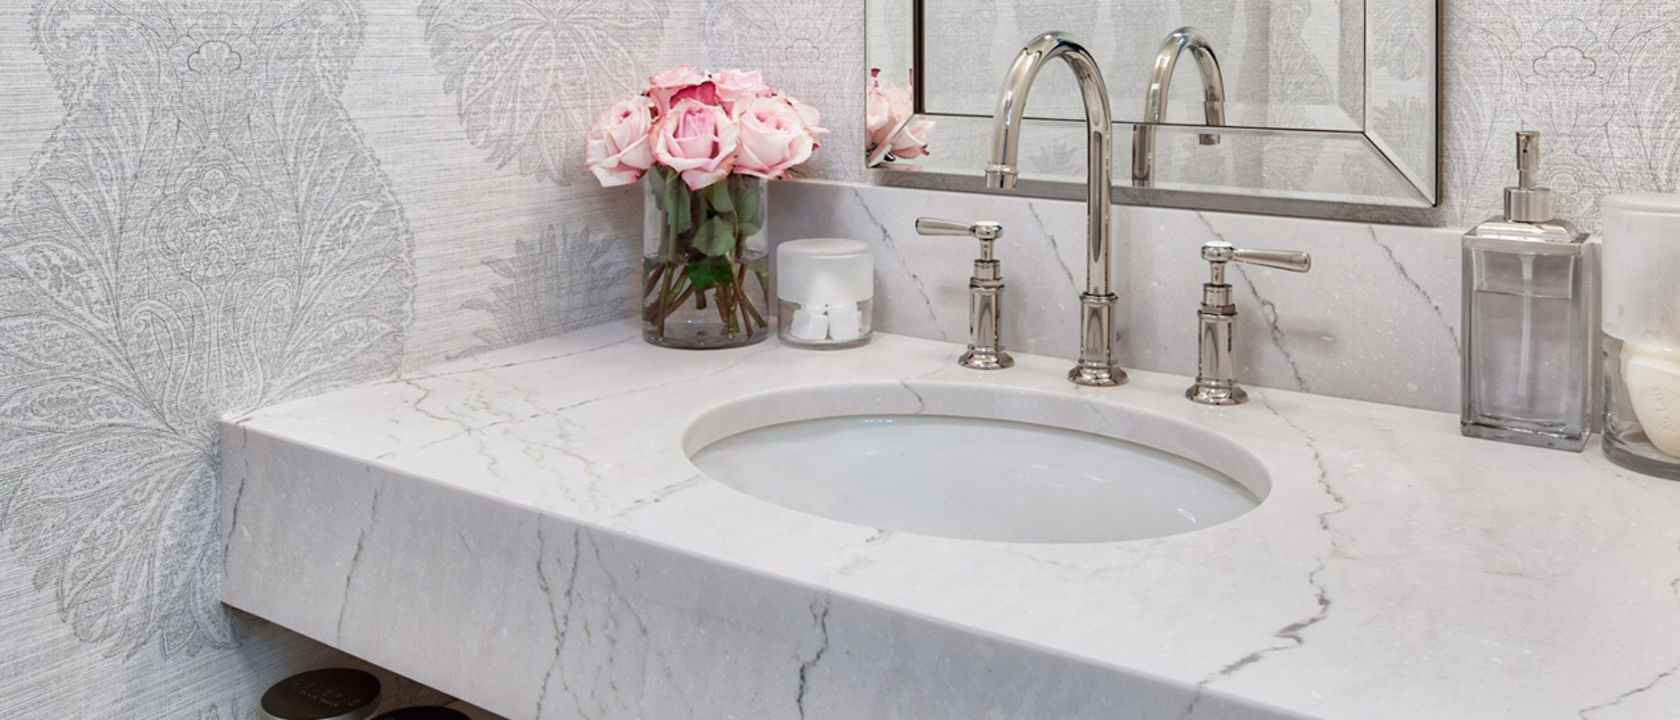 Cambria Ella quartz powder room sink vanity countertop